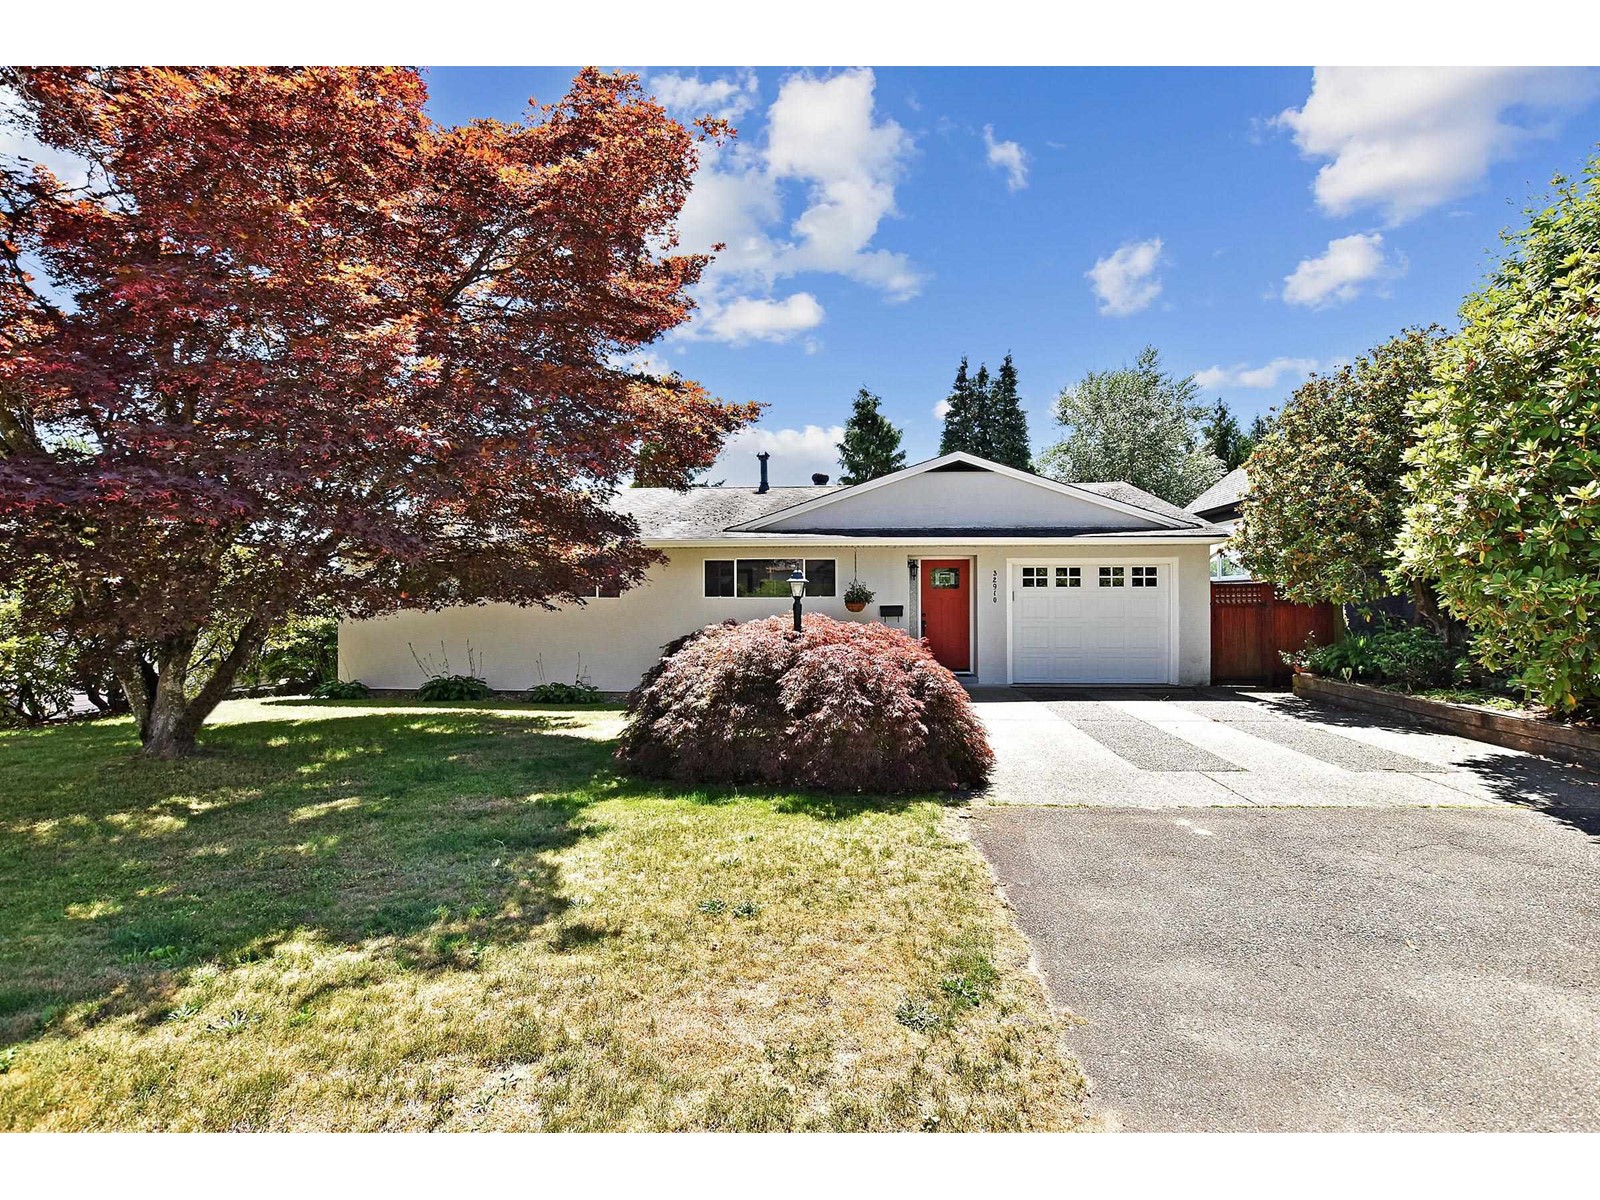 Property Listing: 32910 4th Avenue, Mission, British Columbia